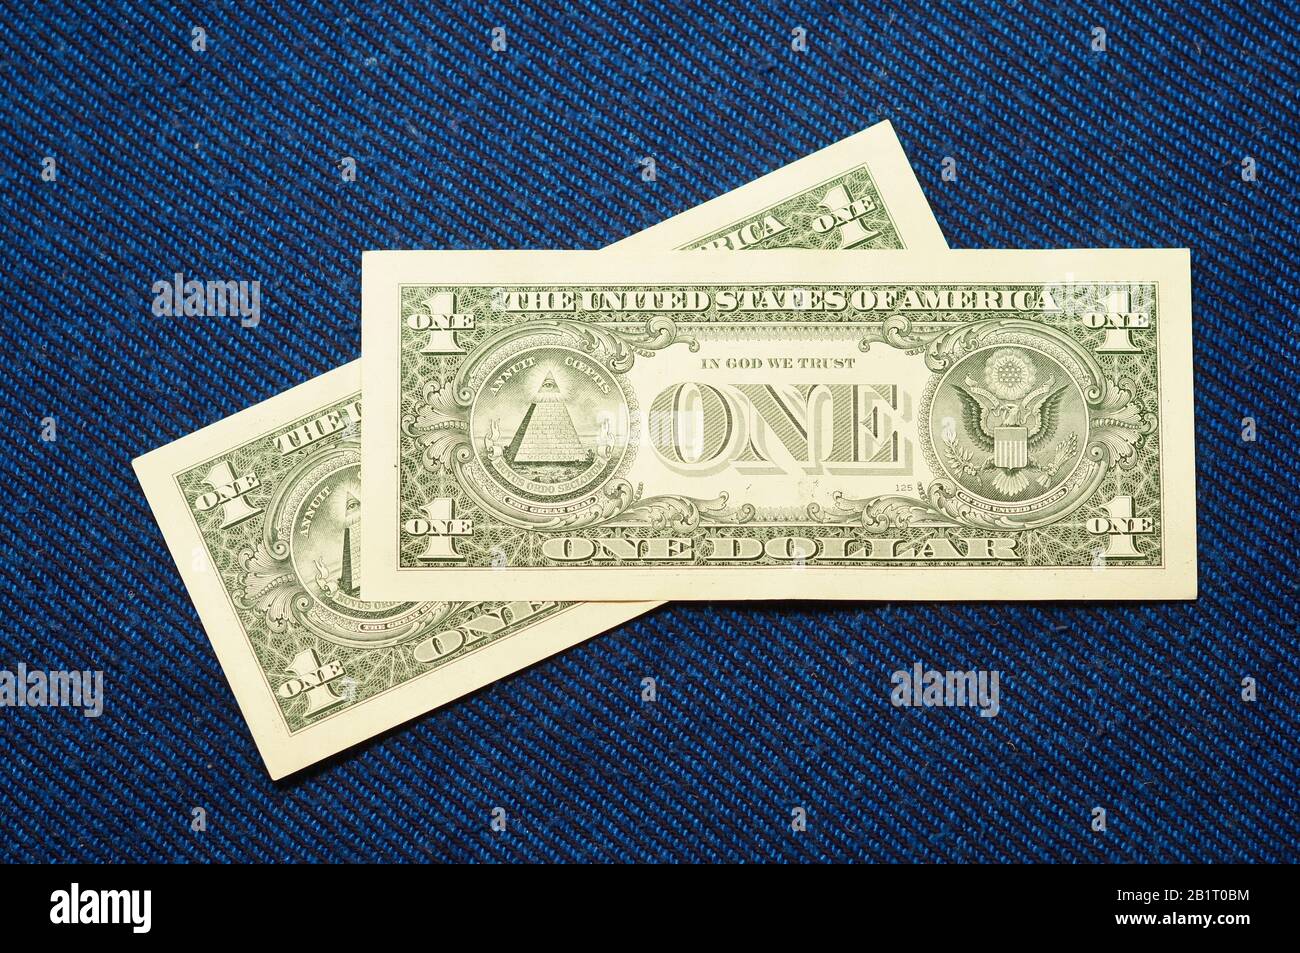 US 1 dollar bills $1 greenback buck single Stock Photo